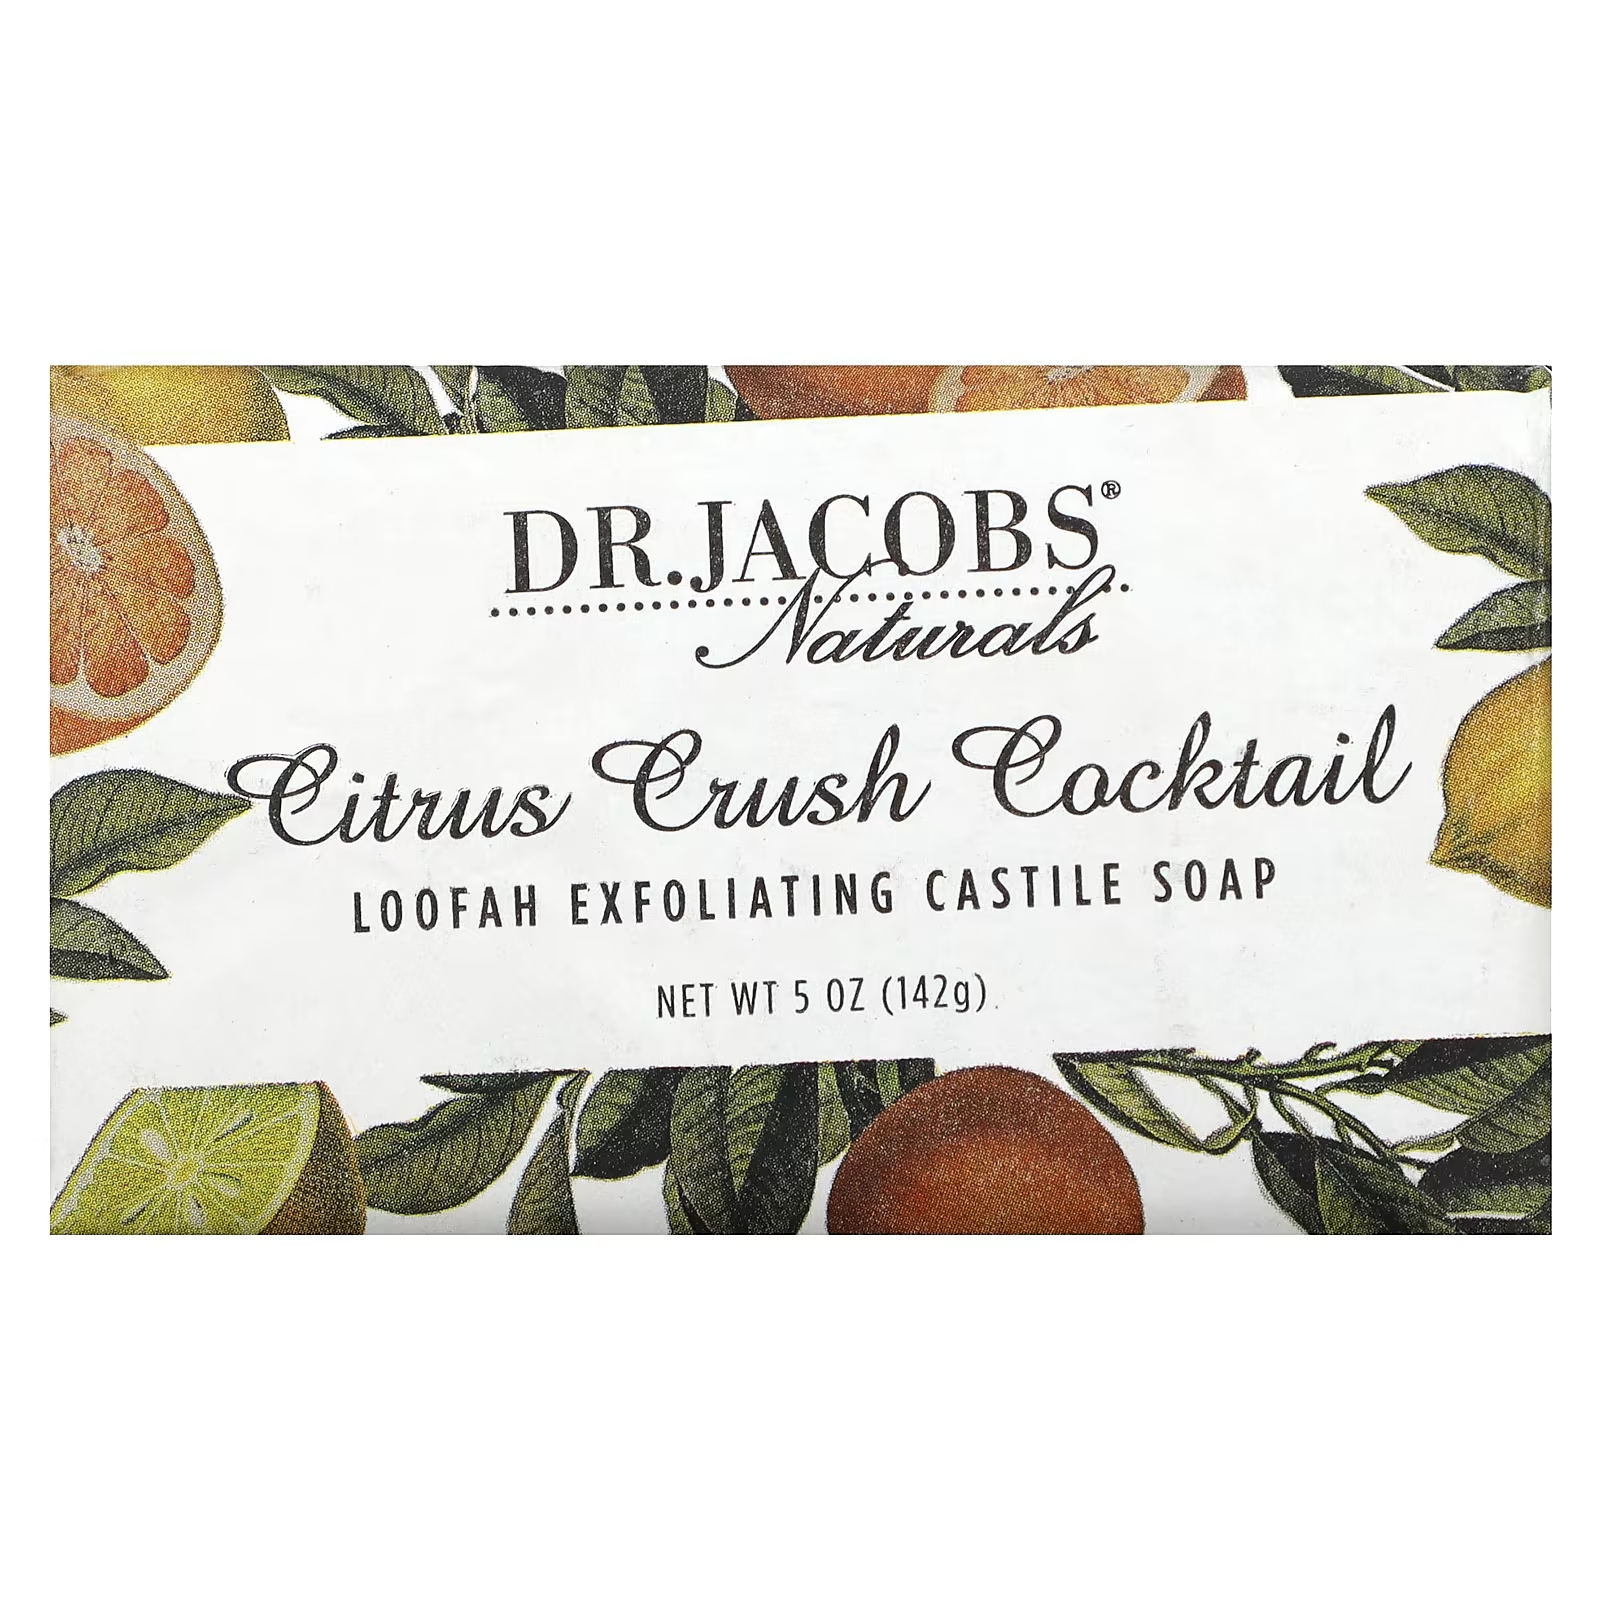 Jacobs Naturals Loofah Отшелушивающее кастильское мыло Citrus Crush Cocktail, 5 унций (142 г) Dr. Jacobs Naturals